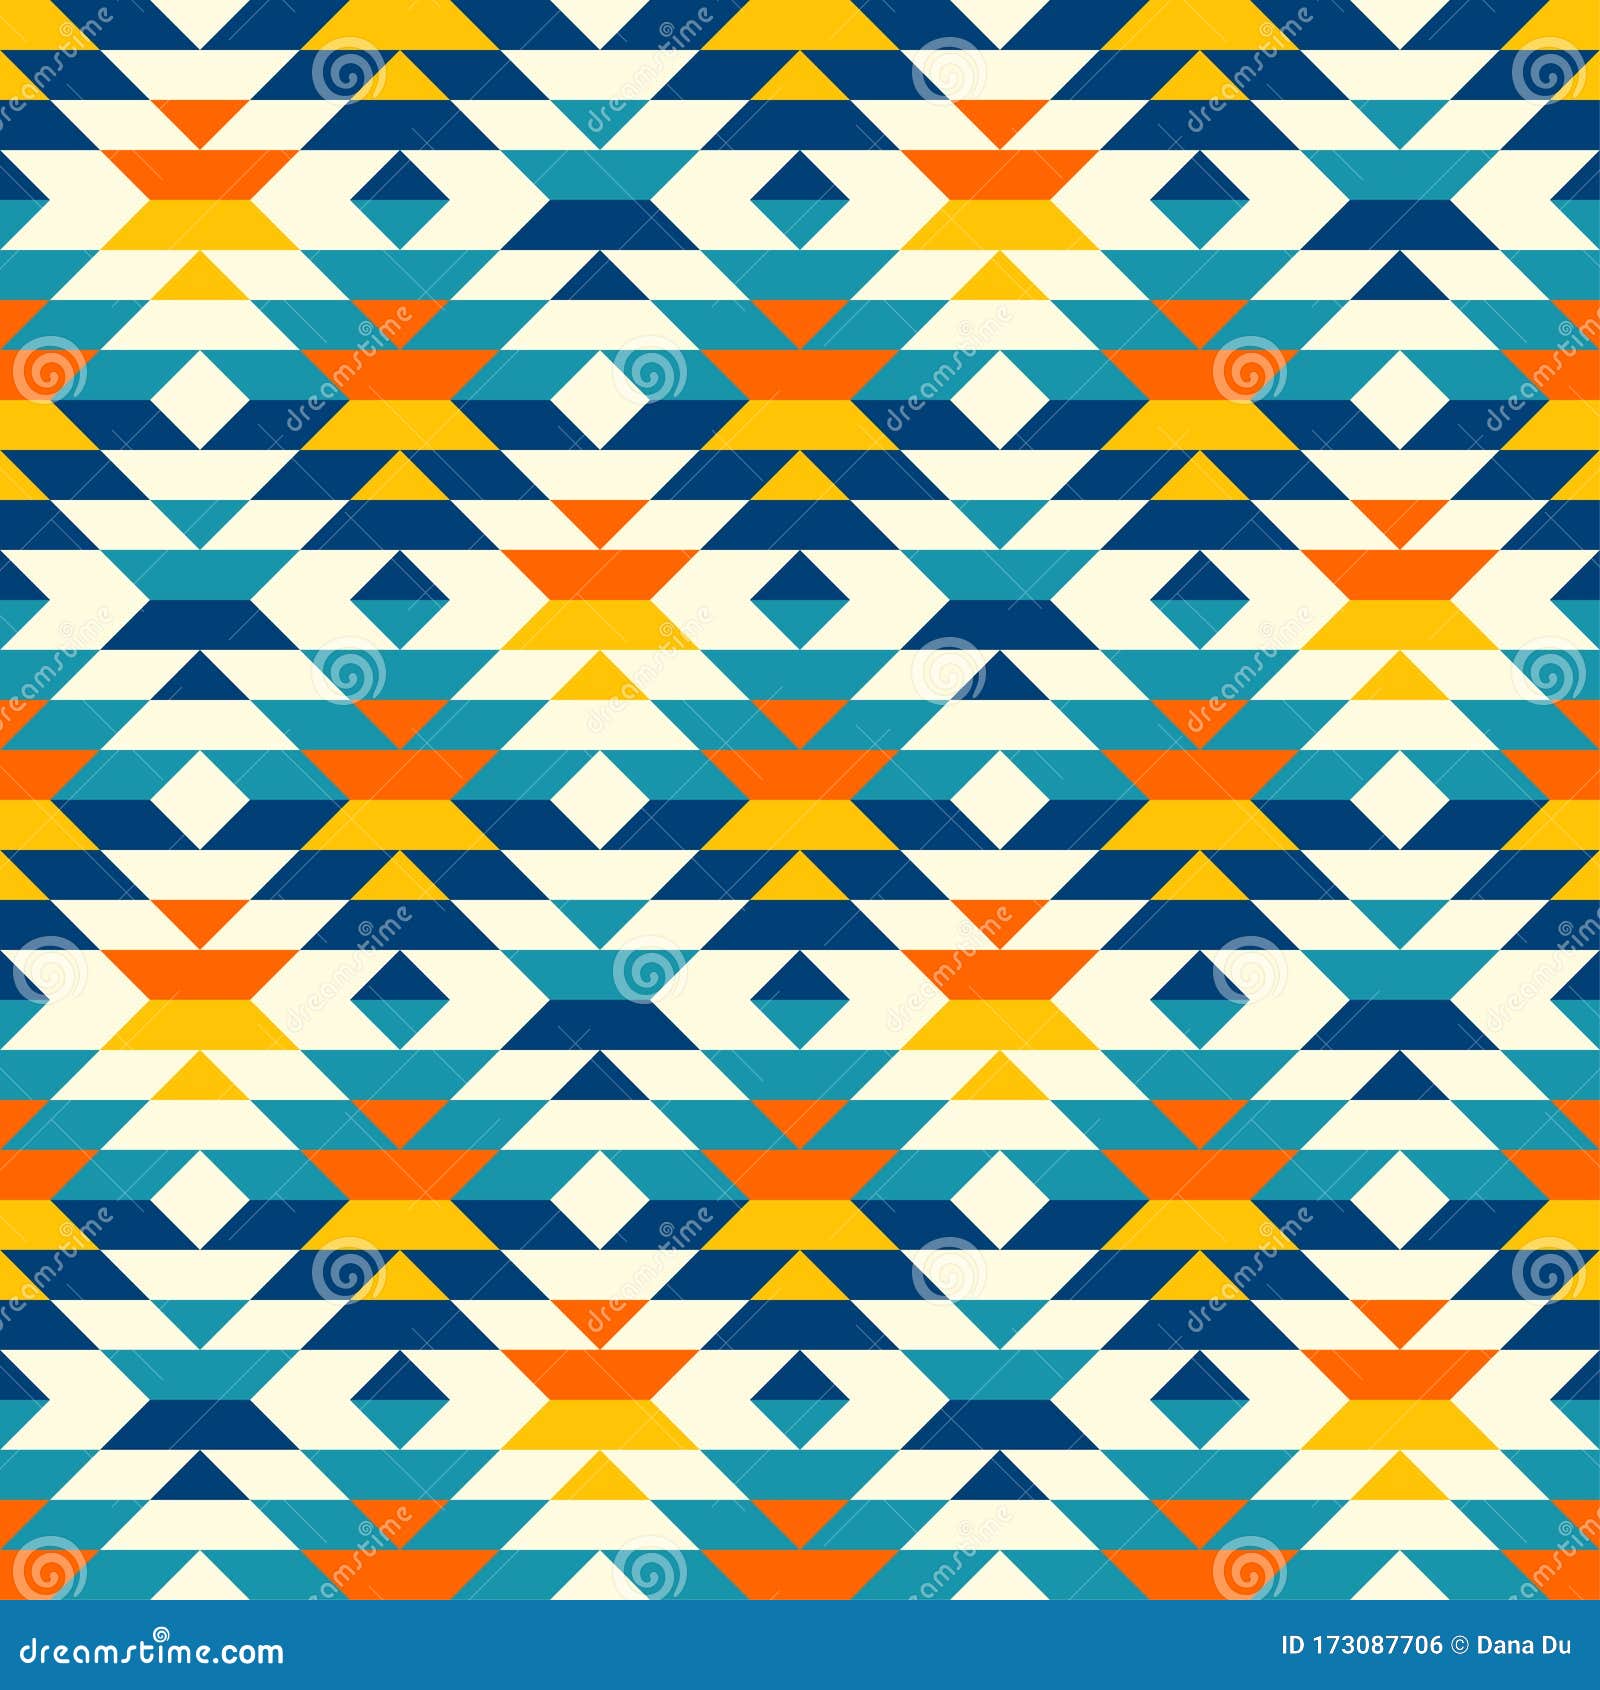 bohemian large aztec diamonds blue pattern